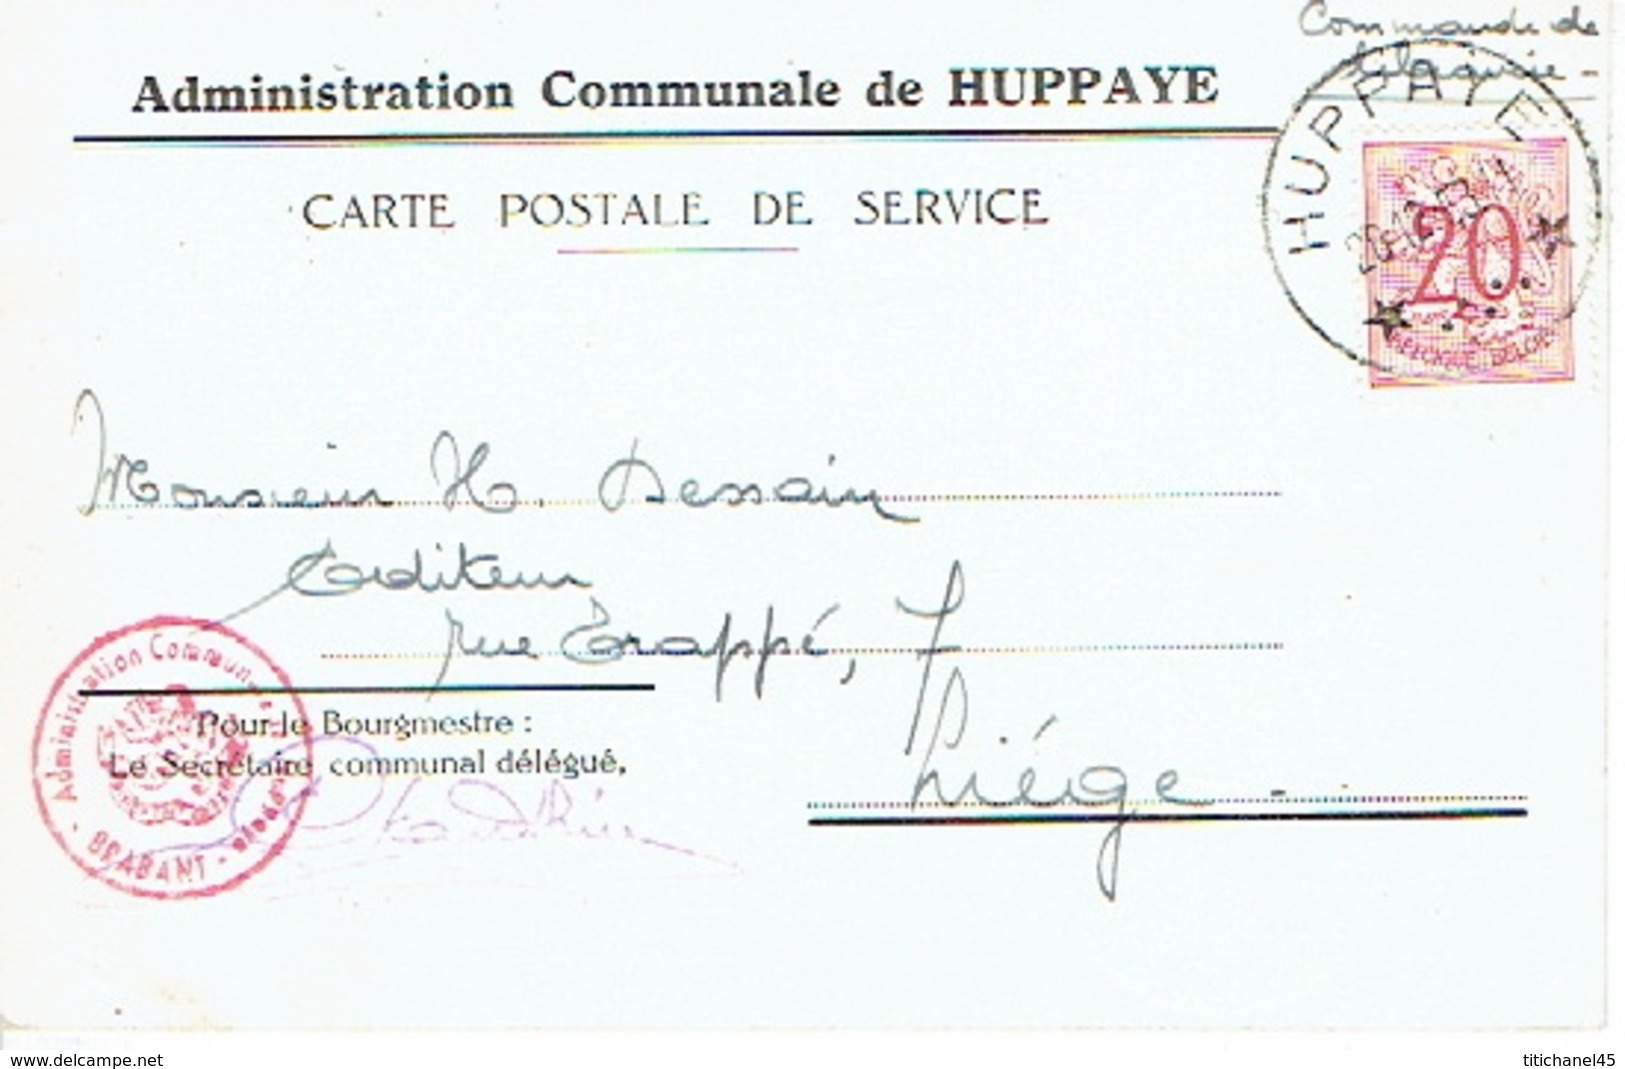 Carte De Service - ADMINISTRATION COMMUNALE DE HUPPAYE - Cachet à étoiles HUPPAYE 30.12.1953 - Sternenstempel